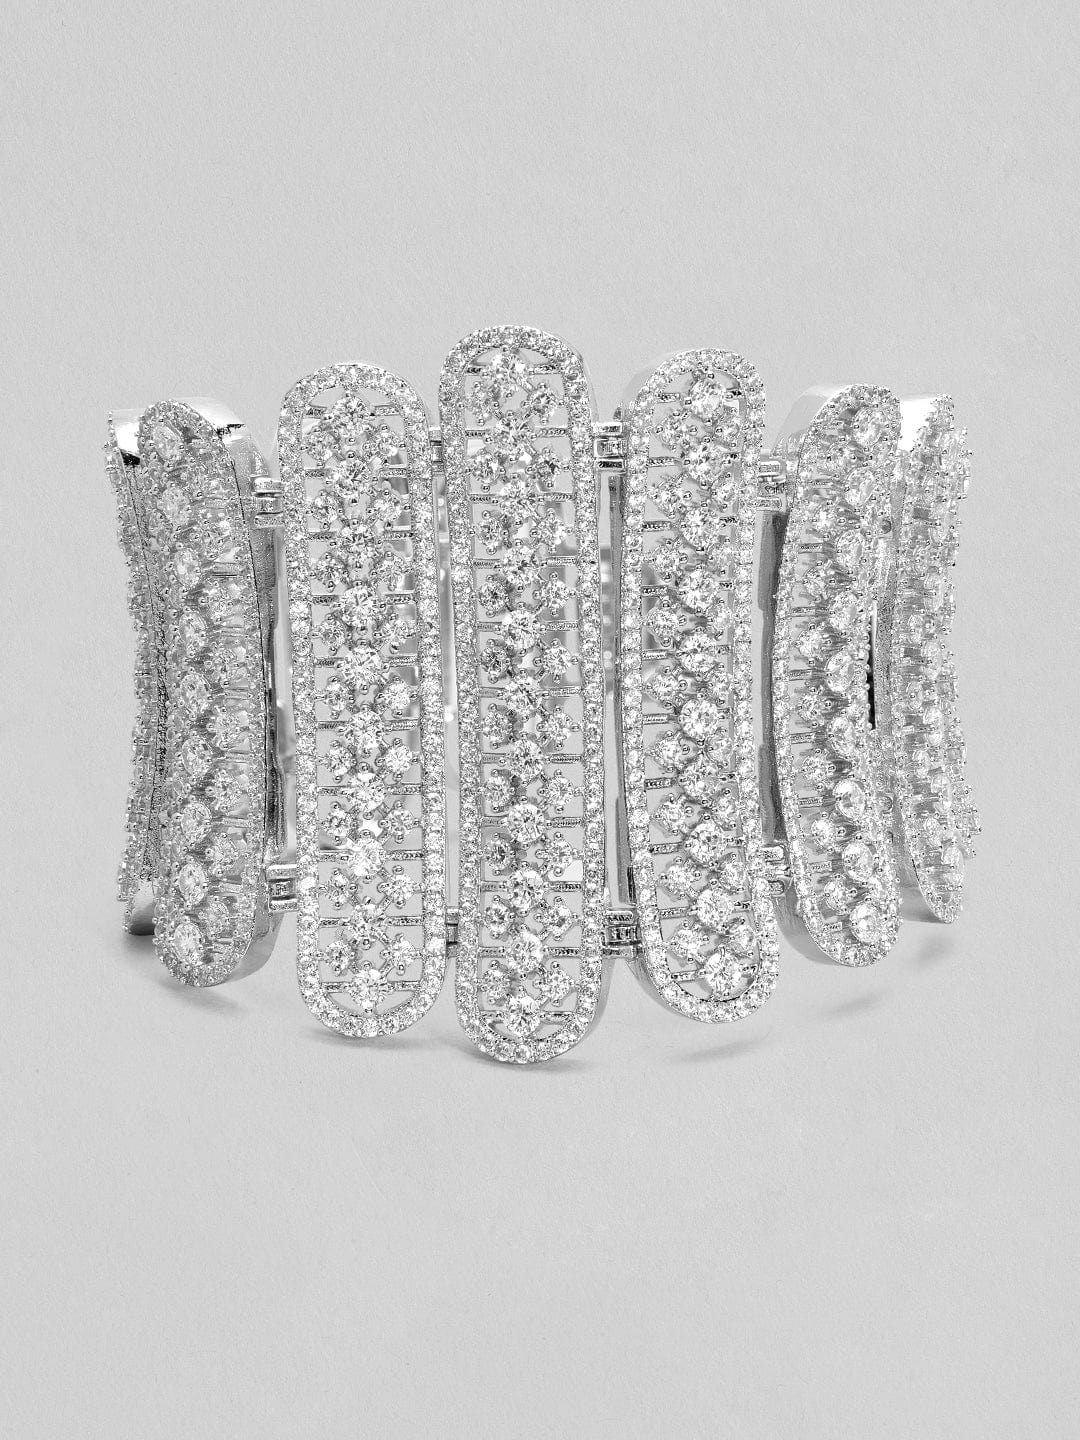 Rubans Silver Plated Kada Bracelet With Studded American Diamonds And Beautiful Design. Bracelets